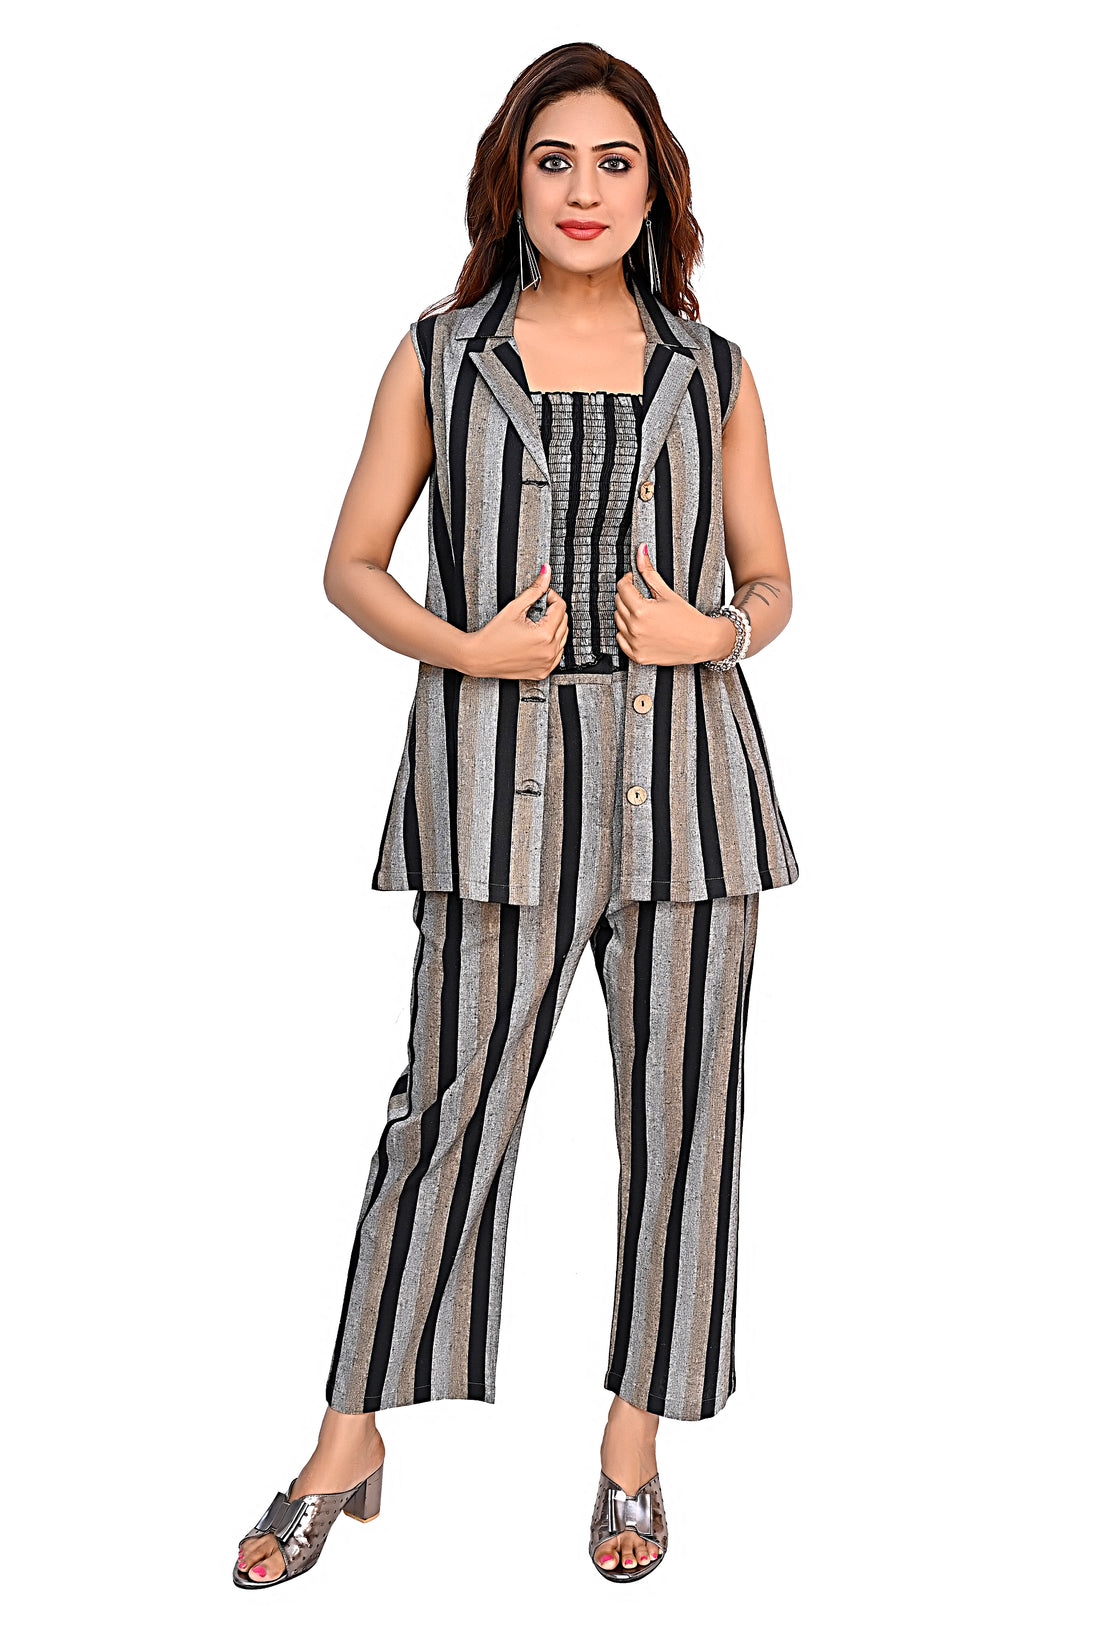 Nirmal online Premium Cotton Stripe co-ord set for Women in Black Colour